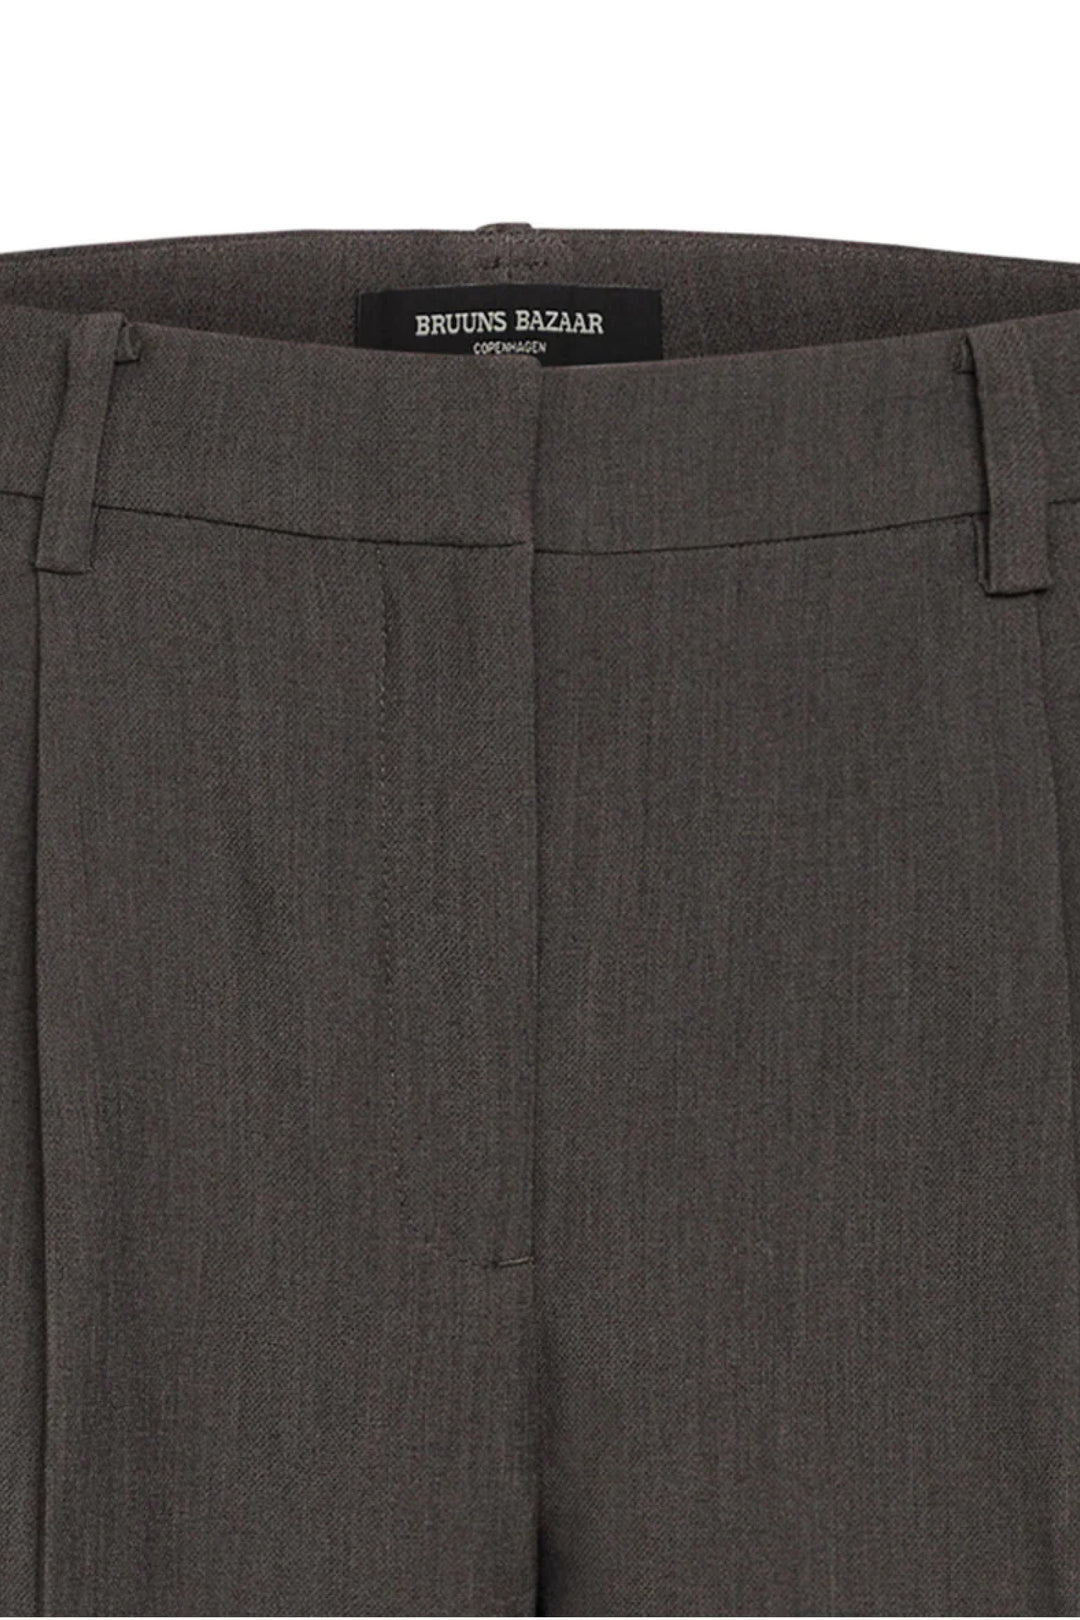 Bruuns Bazaar Women CindySusBBDagny pants Pants Dark grey mel